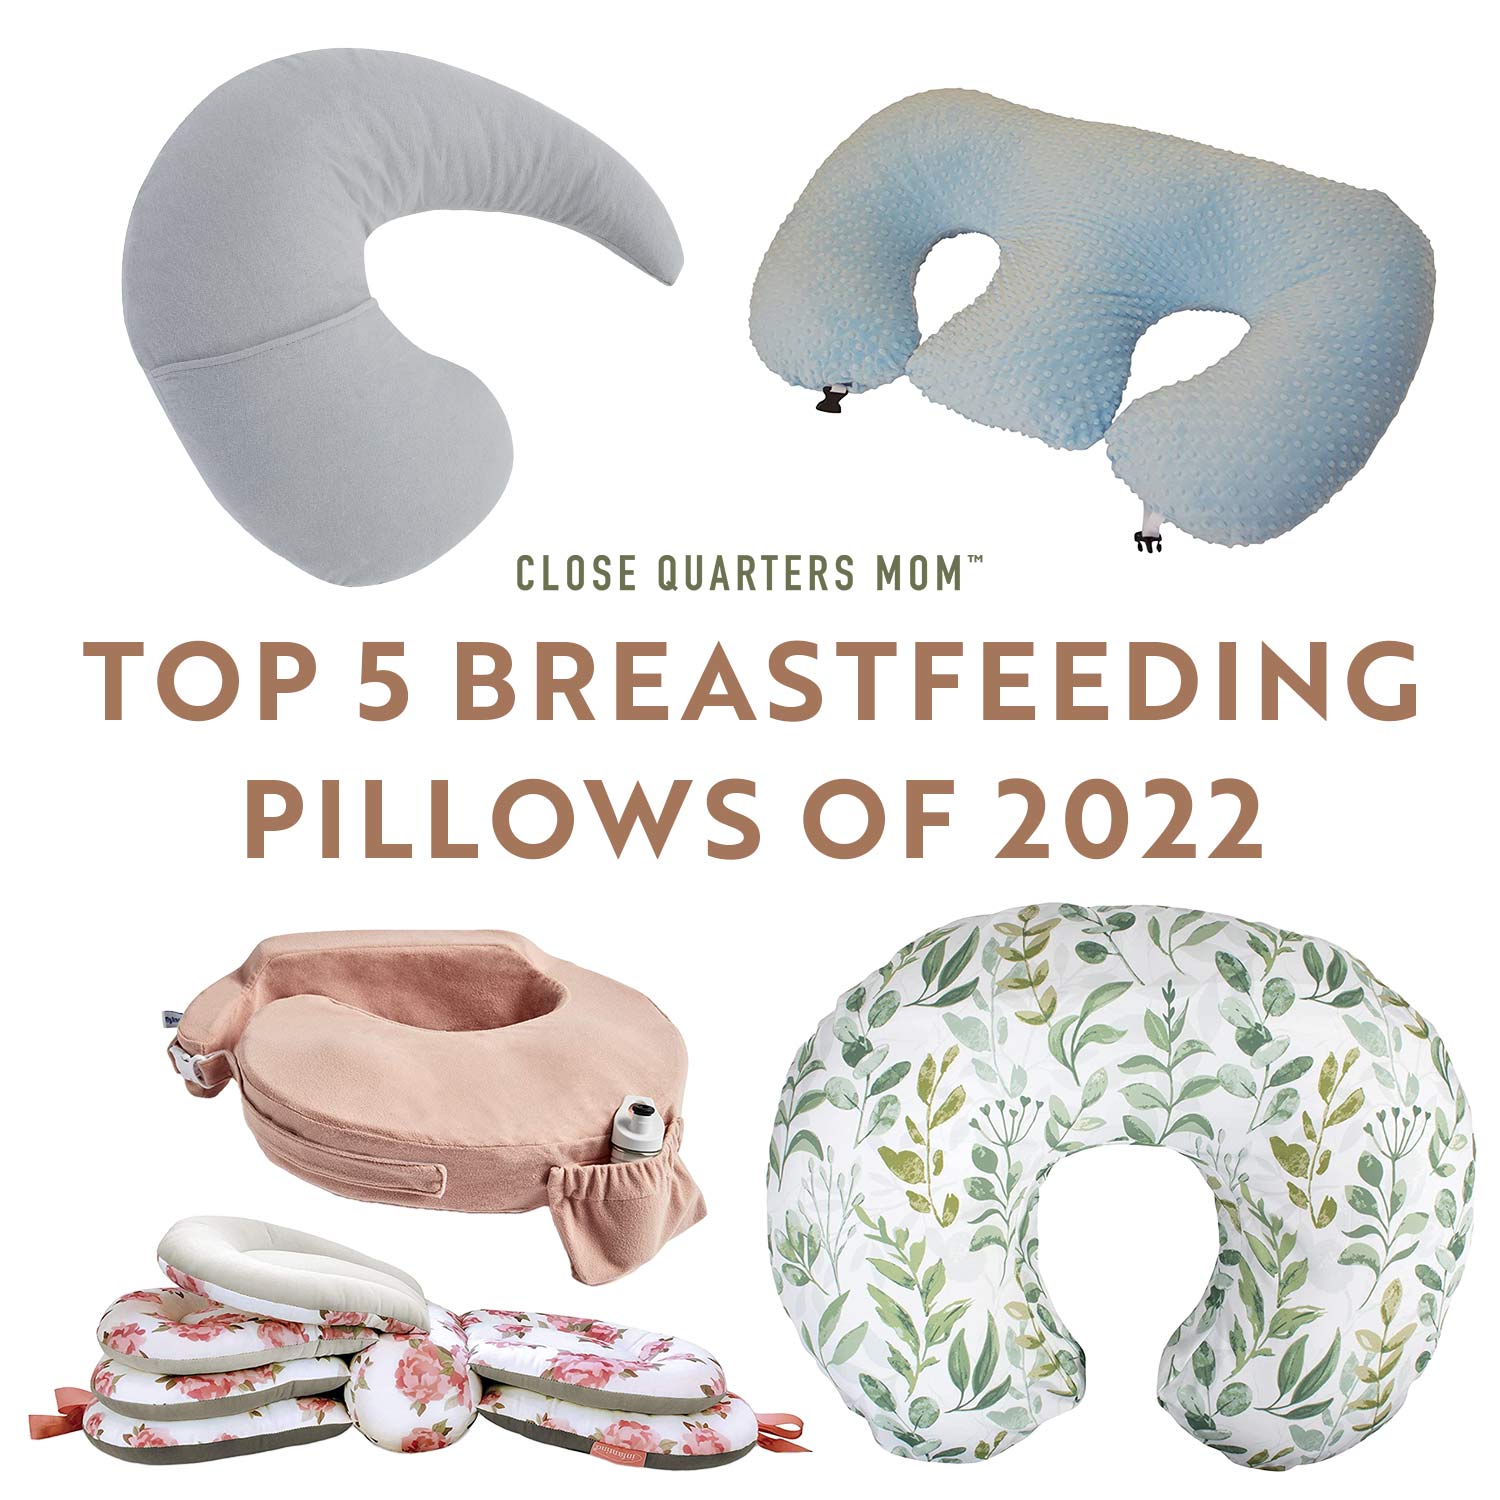 Top 5 Breastfeeding Pillows of 2022